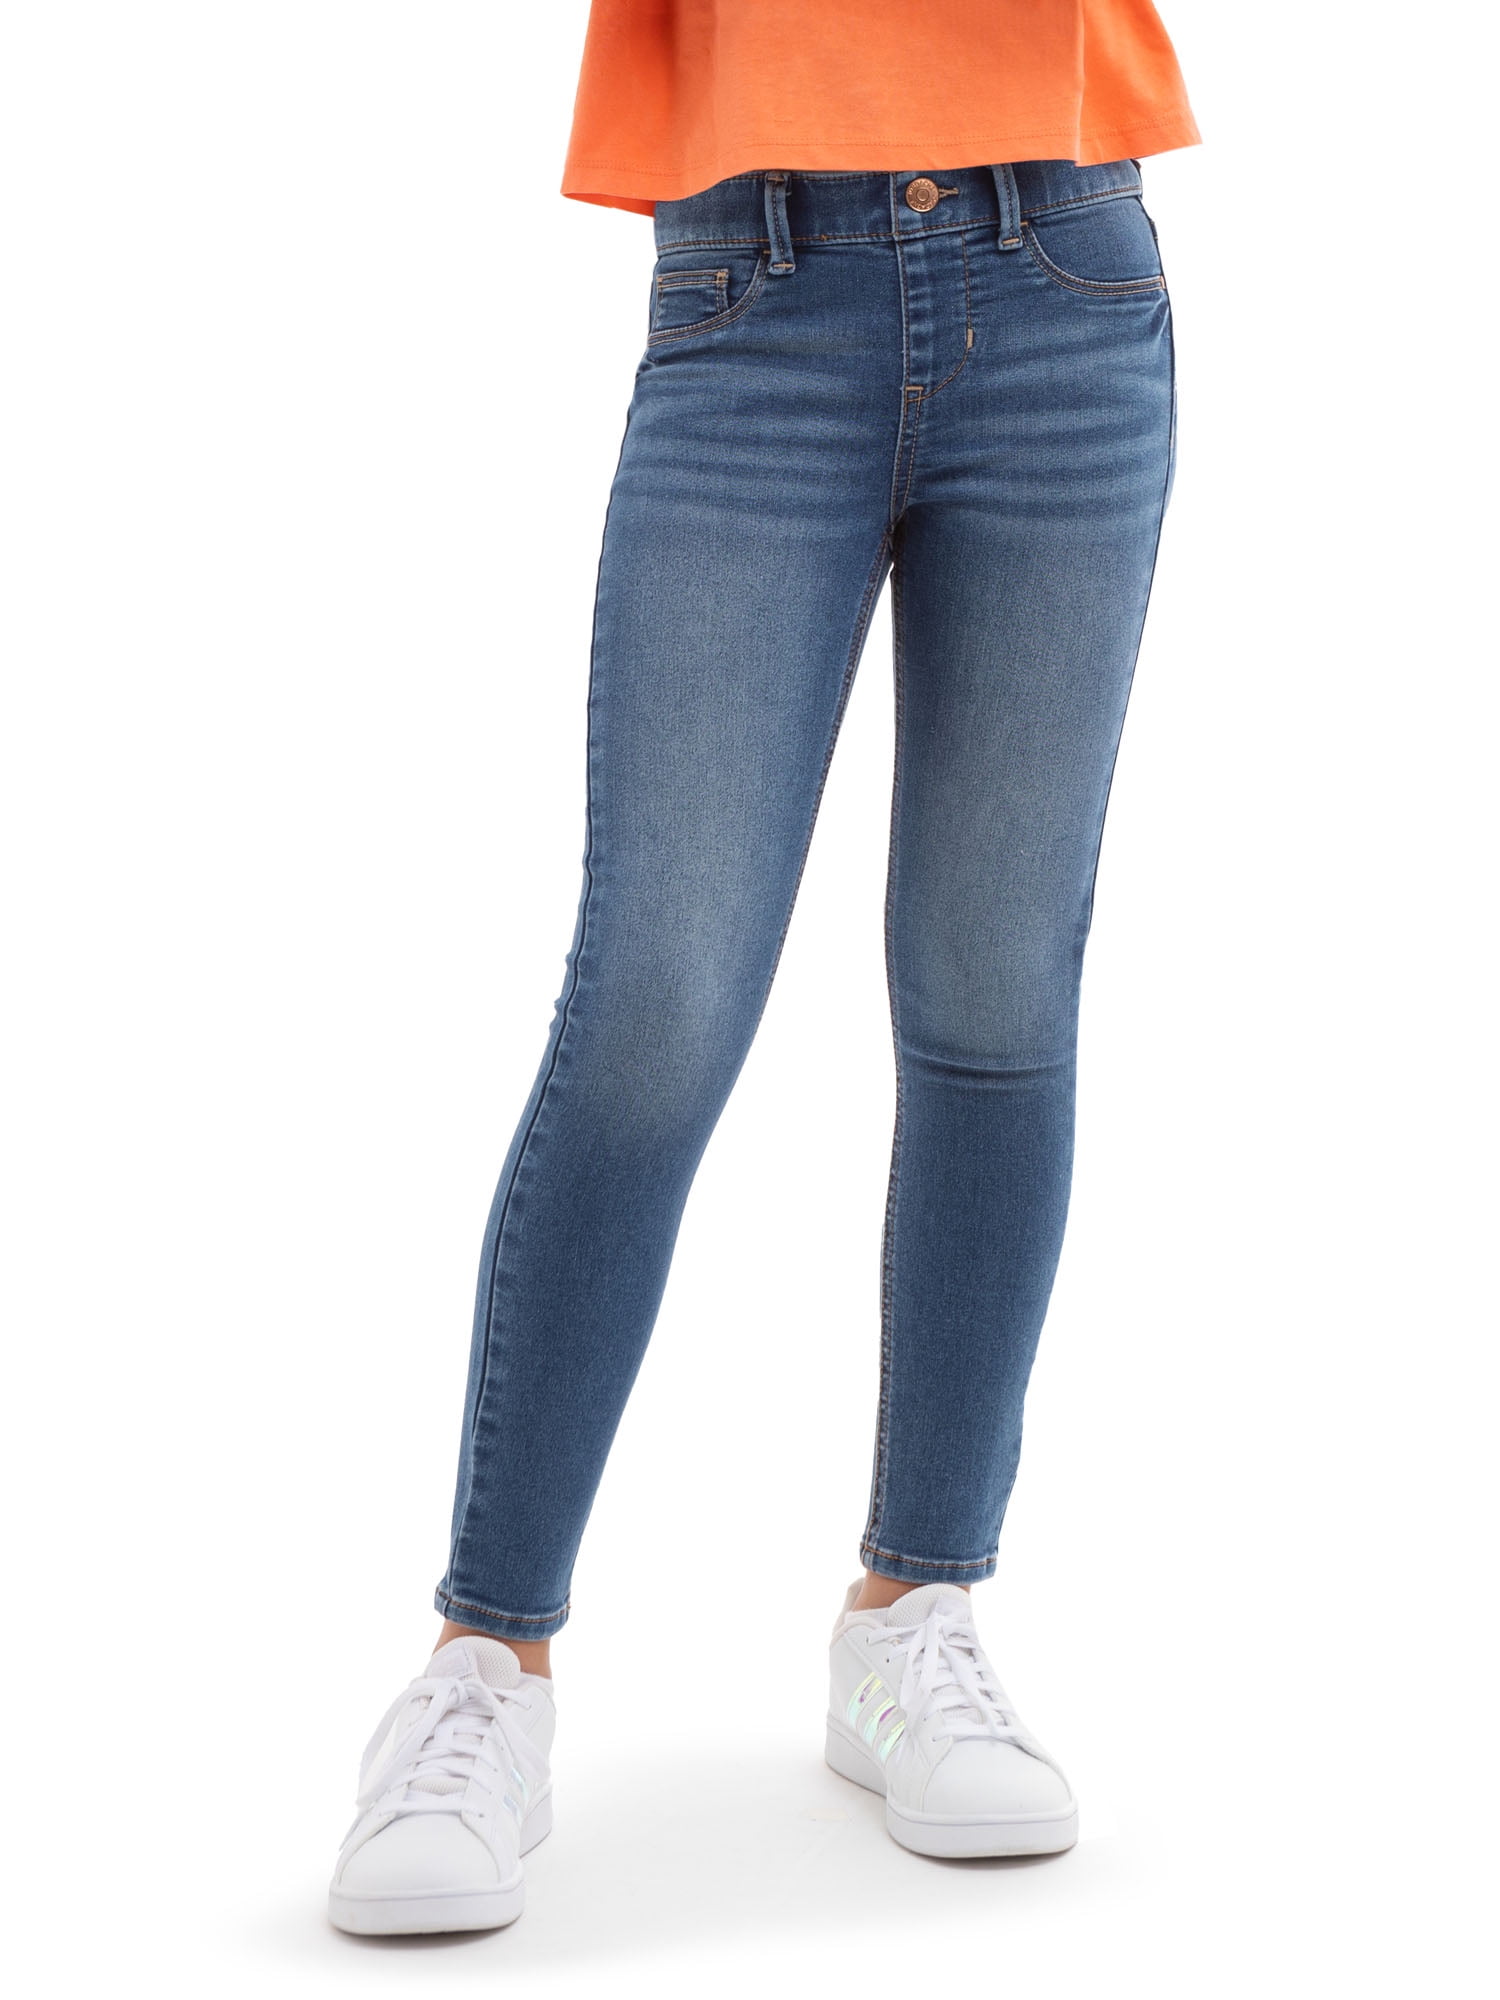 Jordache Girls Jegging Jeans, Sizes 4-18 & Plus 